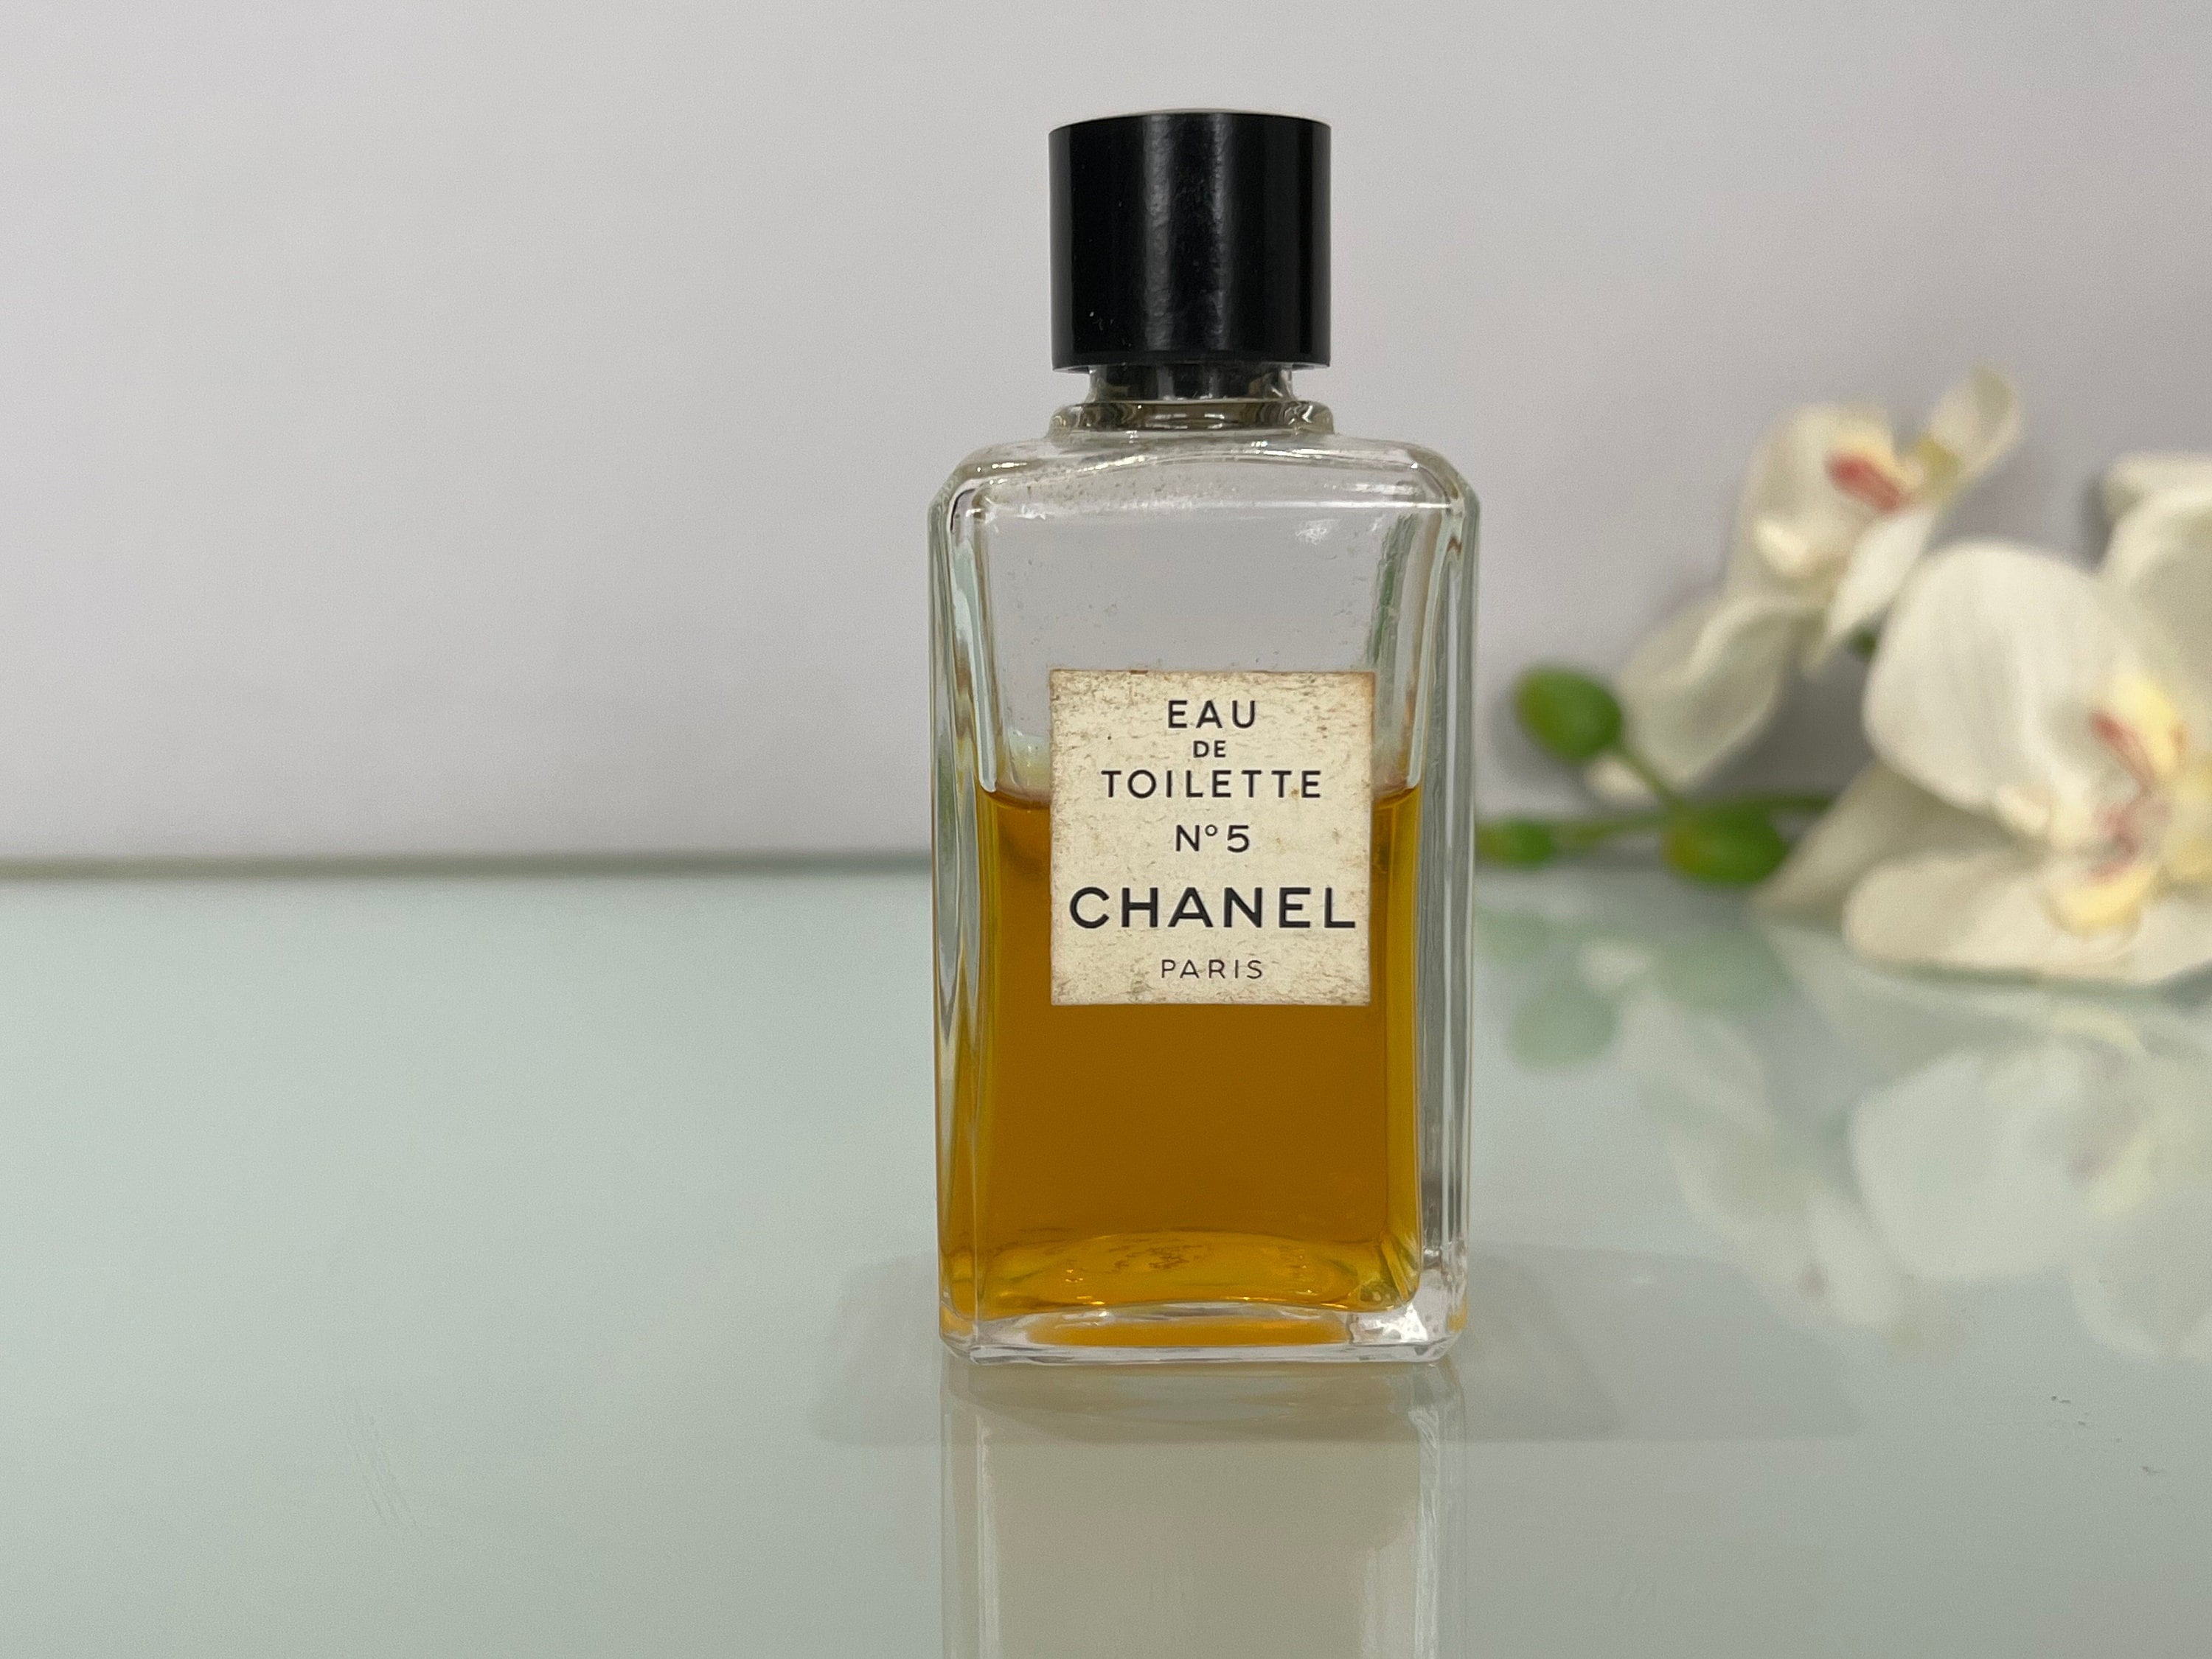 Chanel No 5 Perfume Bottle 